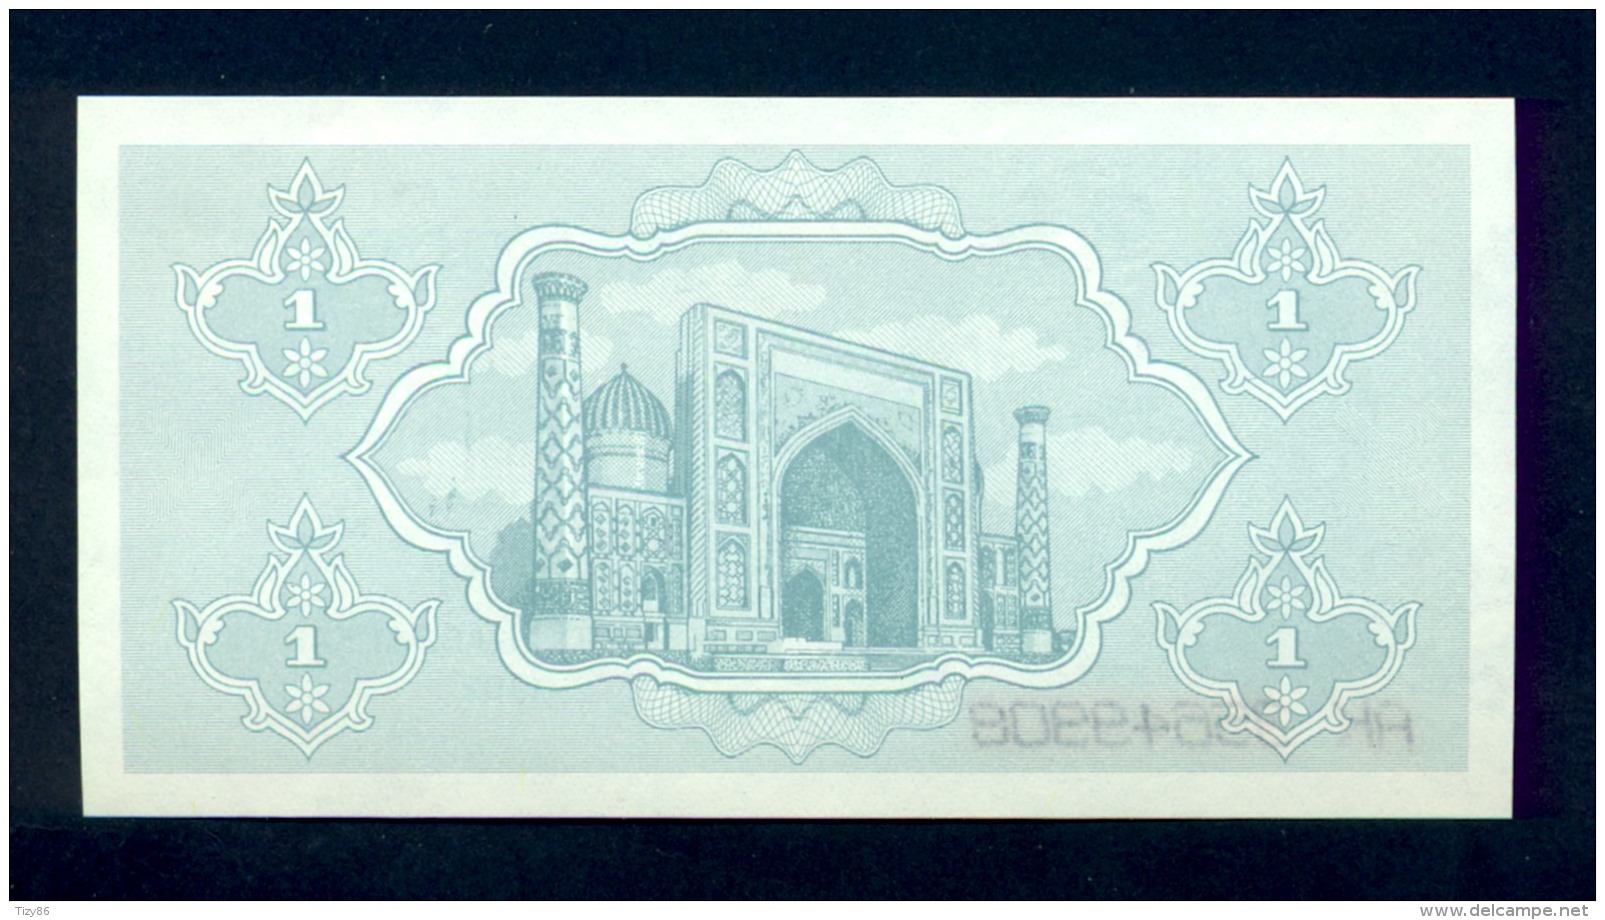 Banconota  UZBEKISTAN 1 Sum 1992 - Uzbekistan